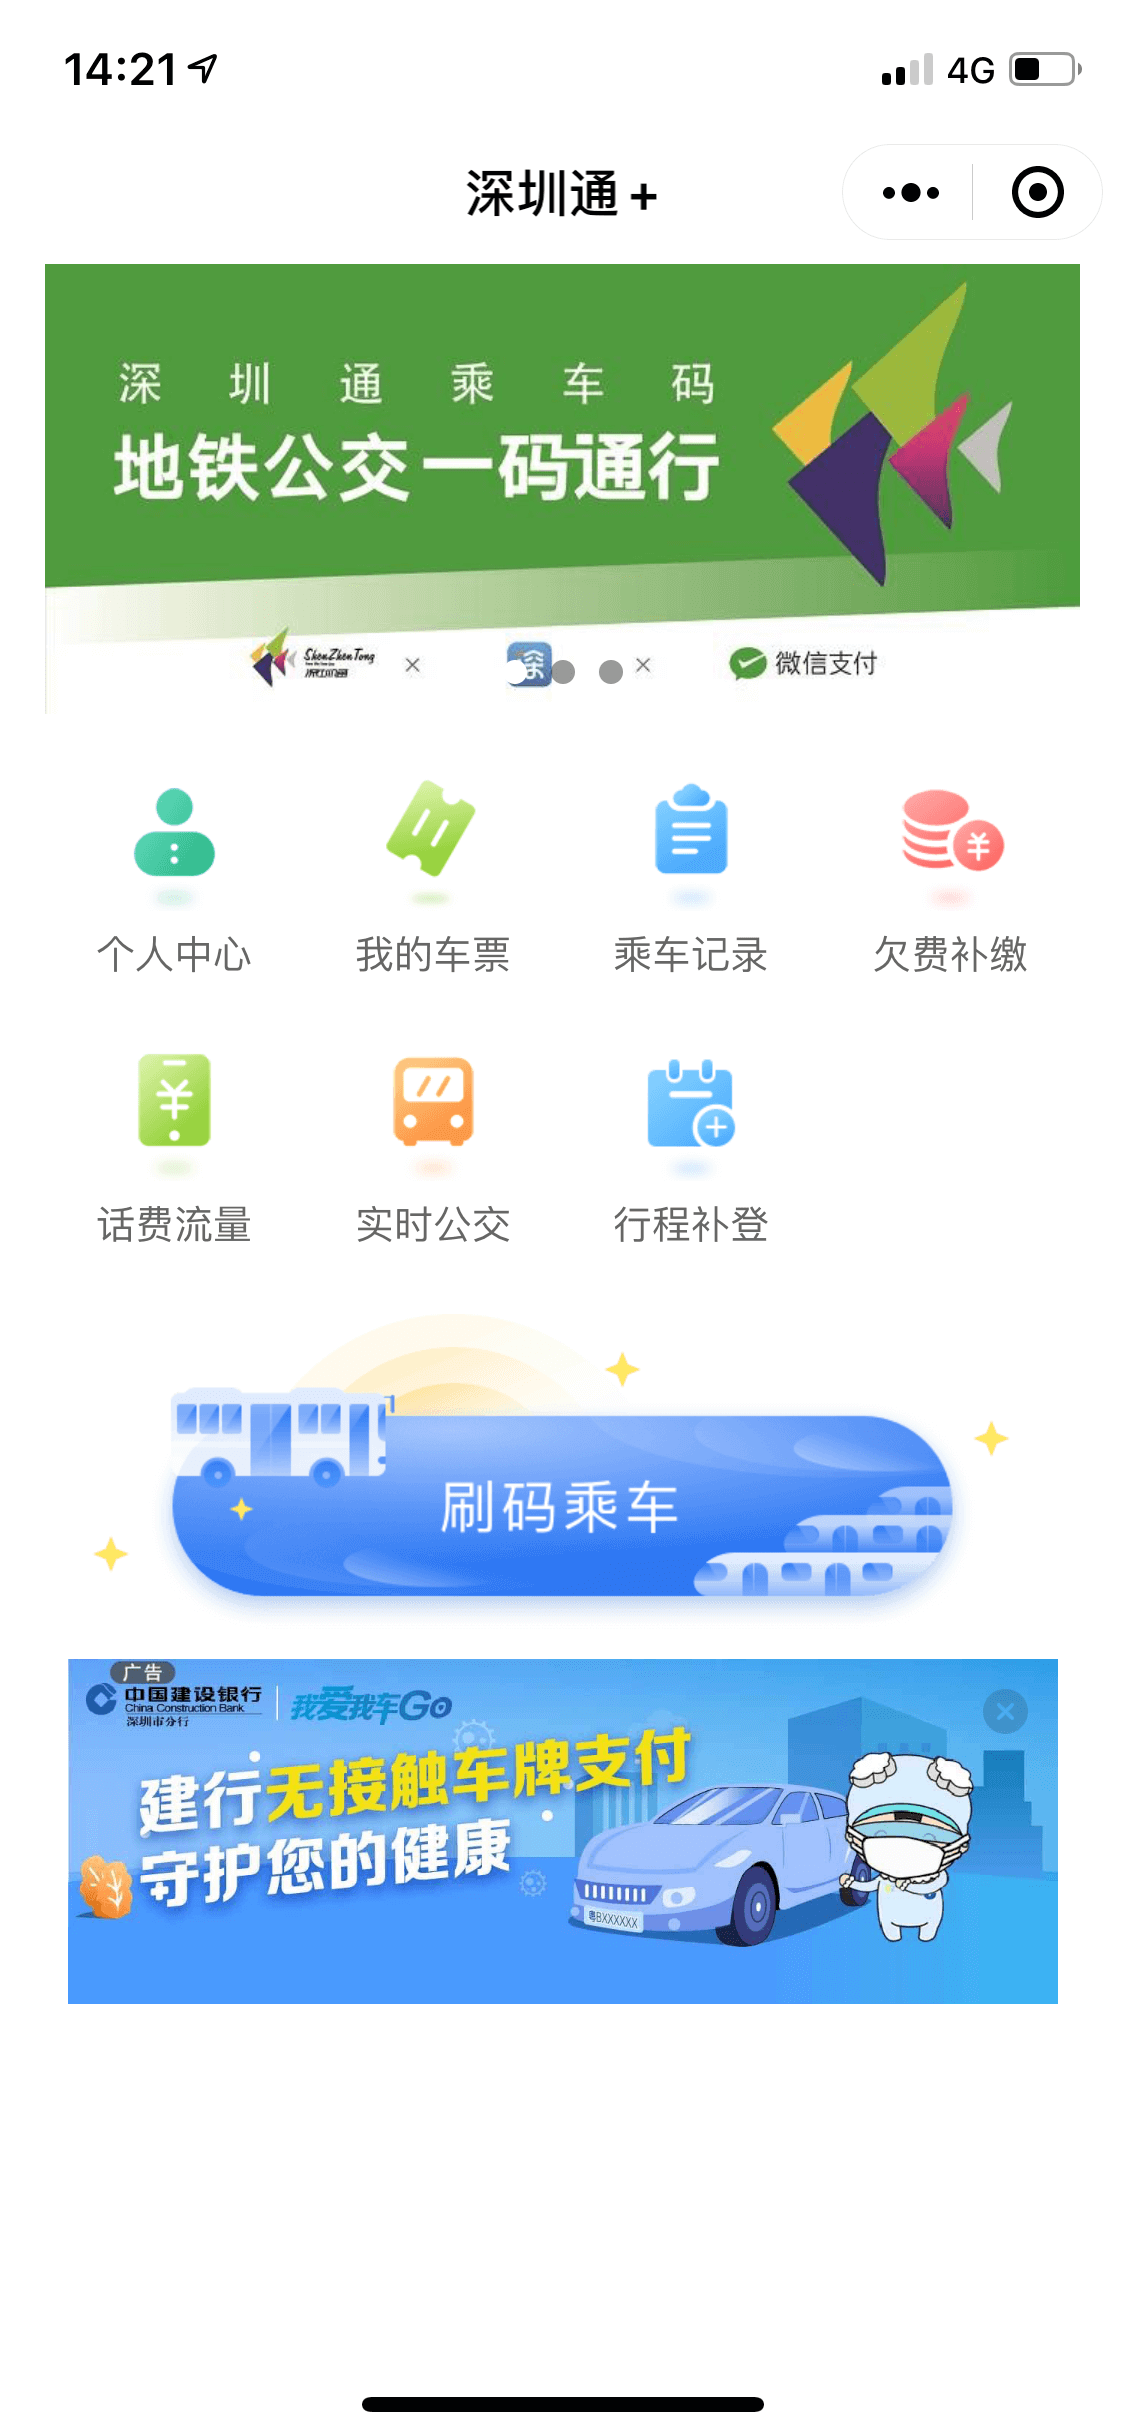 пример мини-приложения в WeChat